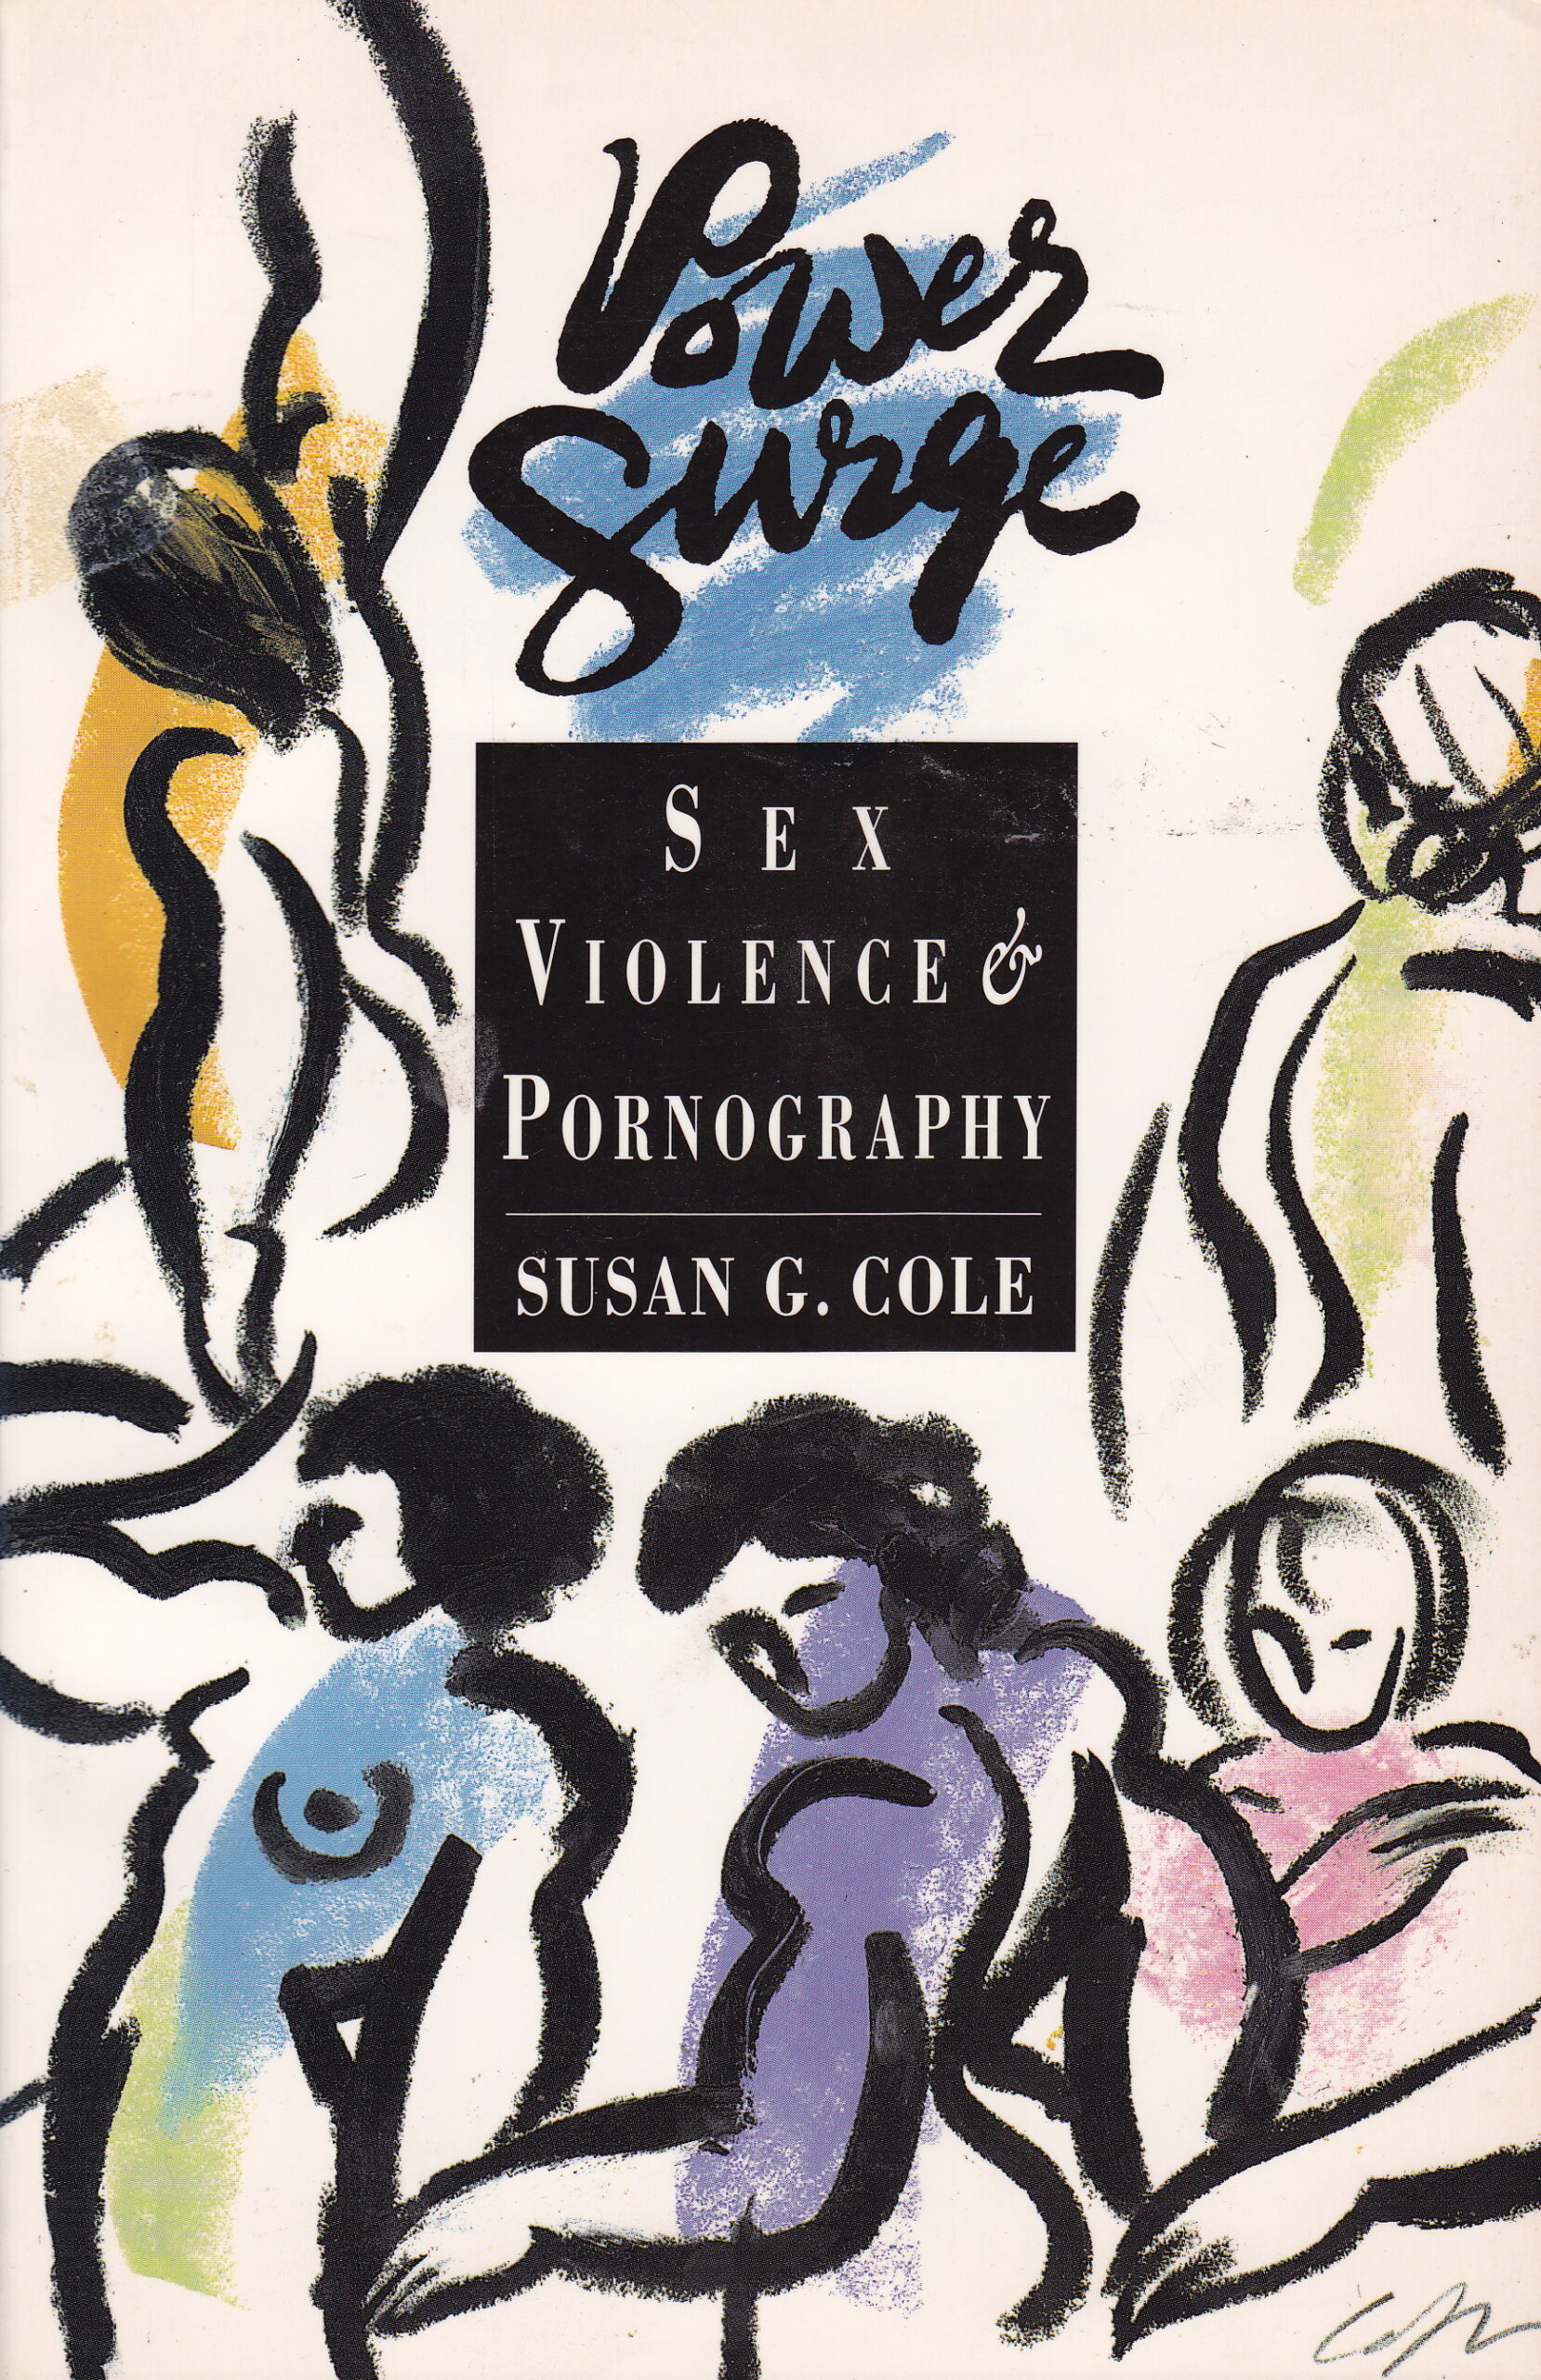 Power Surge: Sex, Violence and Pornography